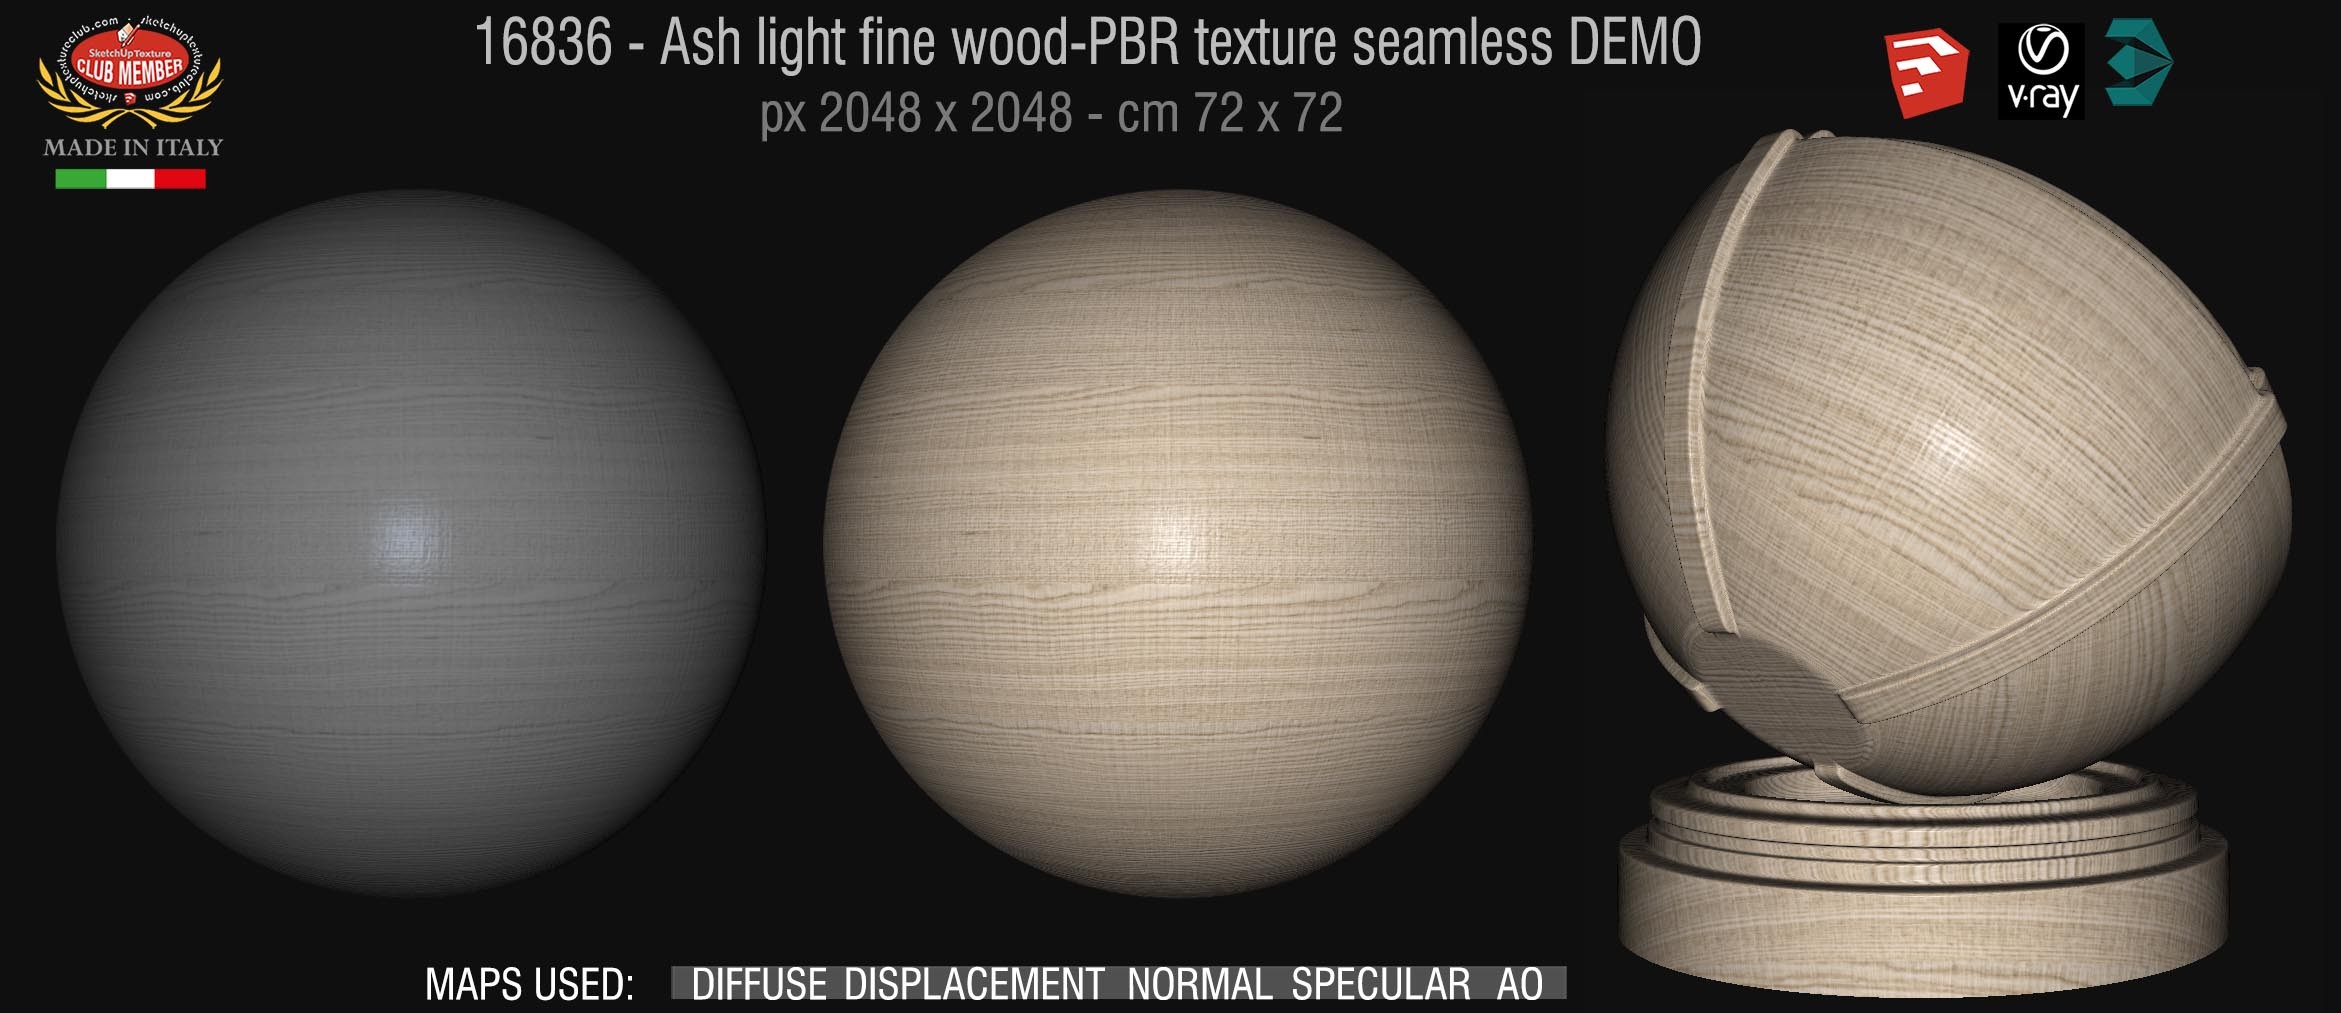 16836 Ash light fine wood-PBR texture seamless DEMO